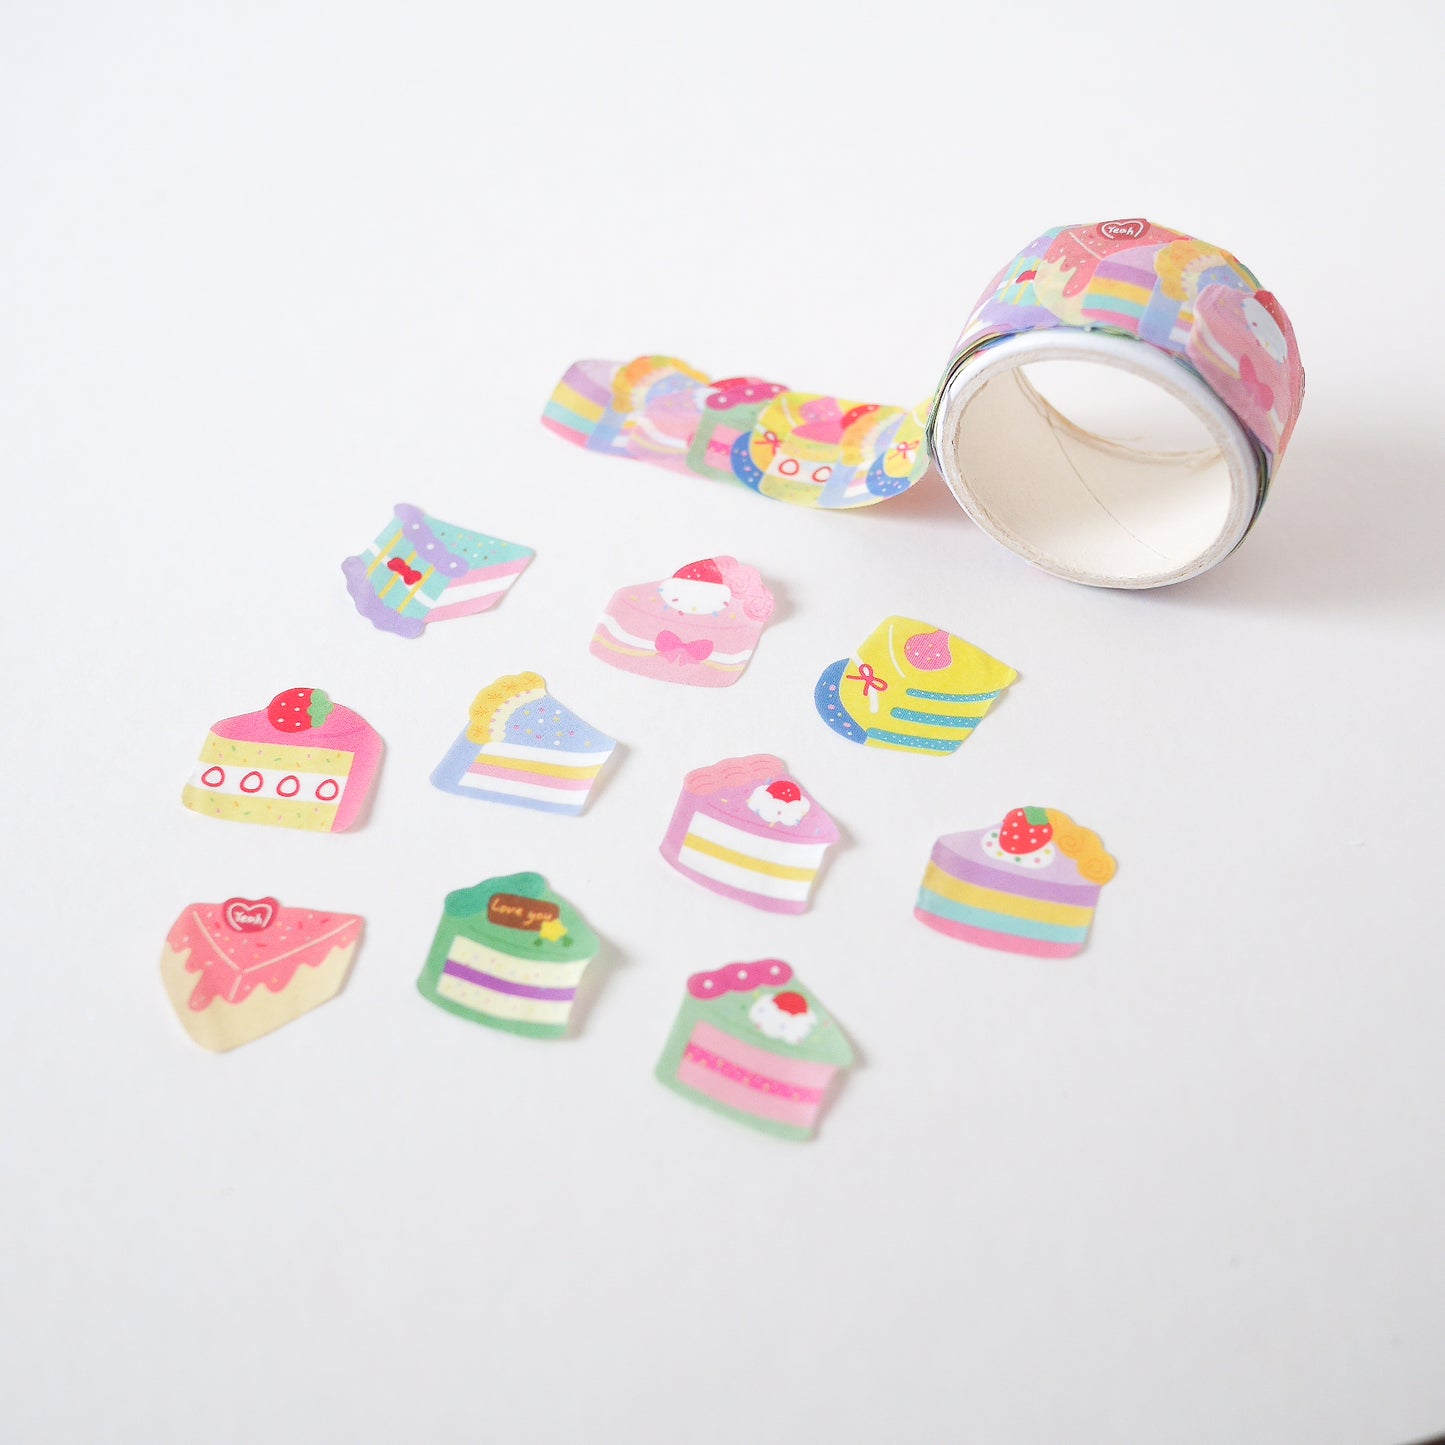 Cakes Galore Washi Stickers